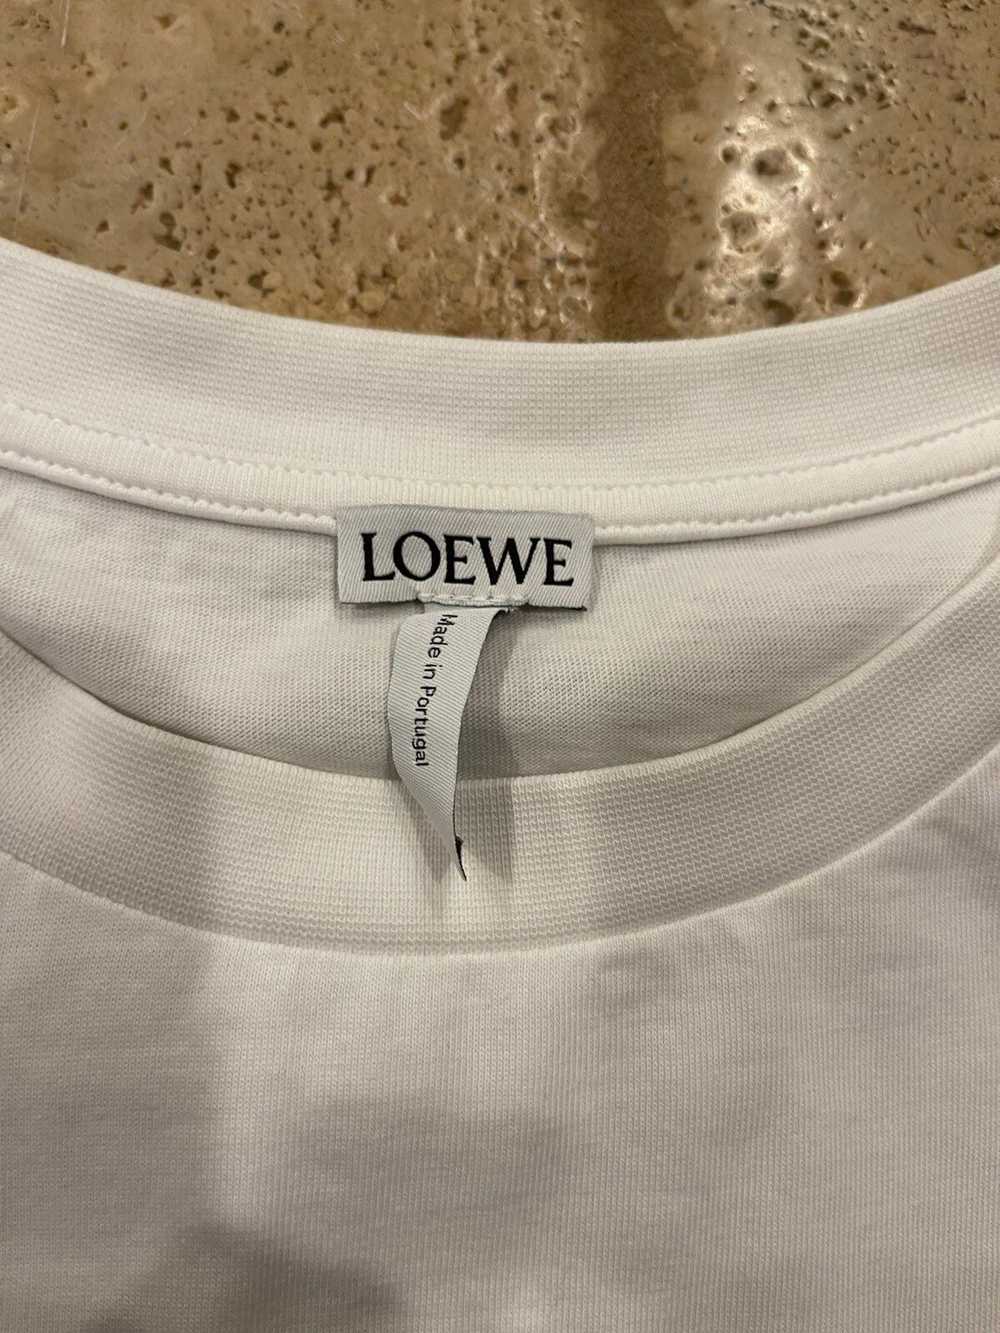 Loewe Loewe FW 2016 Mushroom White Tee - image 7